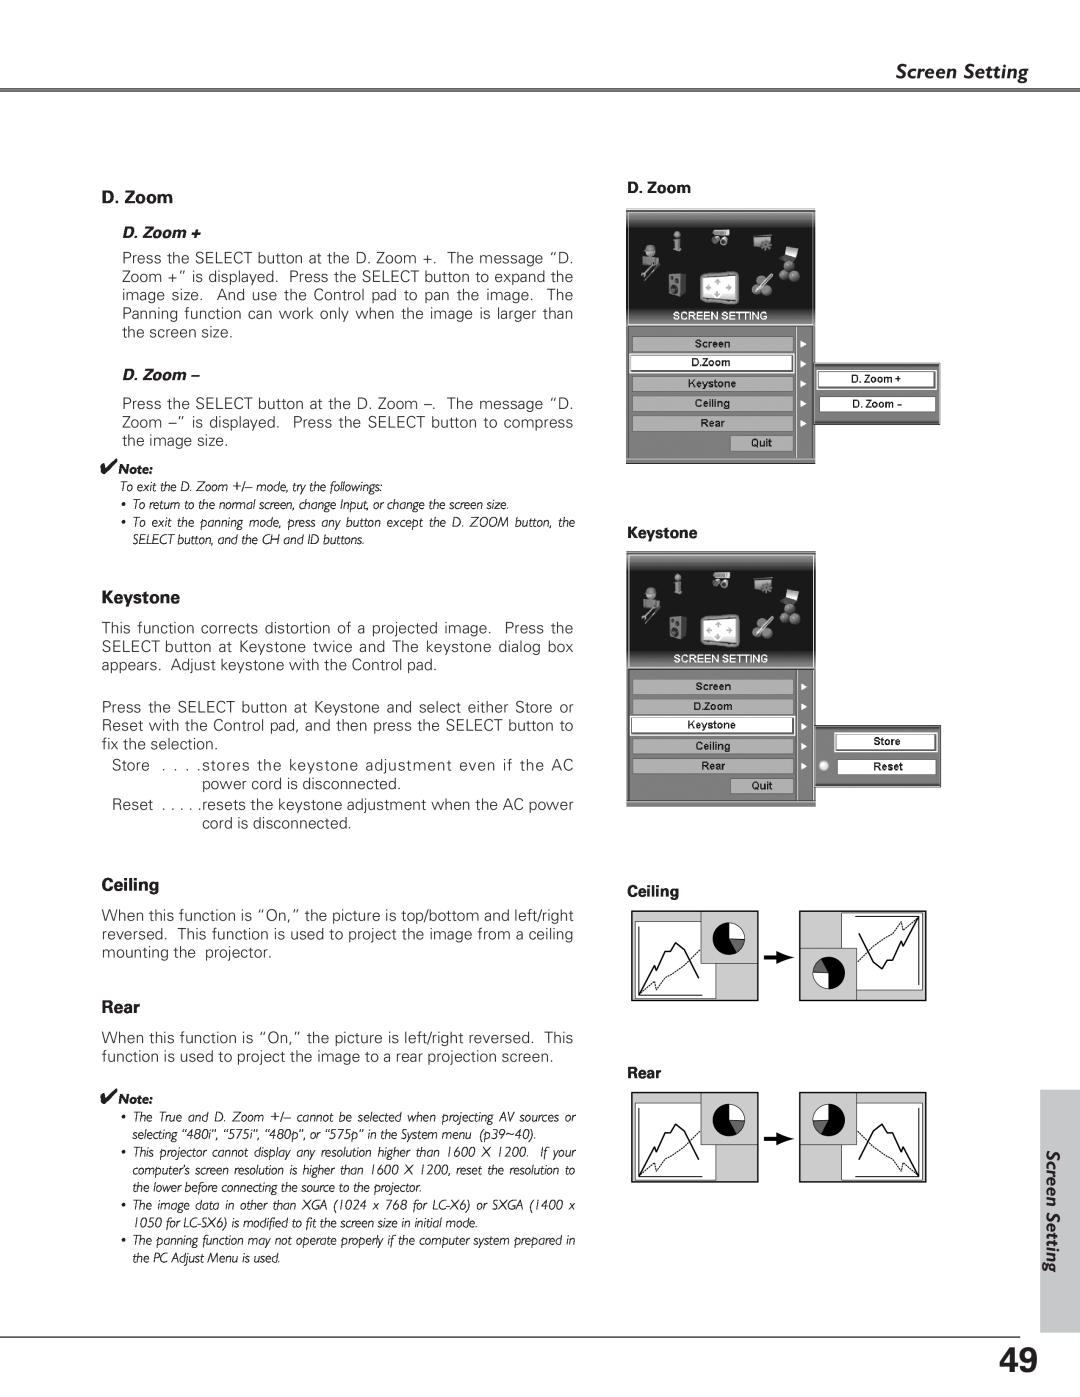 Eiki LC-SX6, LC-X6 owner manual Screen Setting, Keystone, Ceiling, Rear, D. Zoom + 